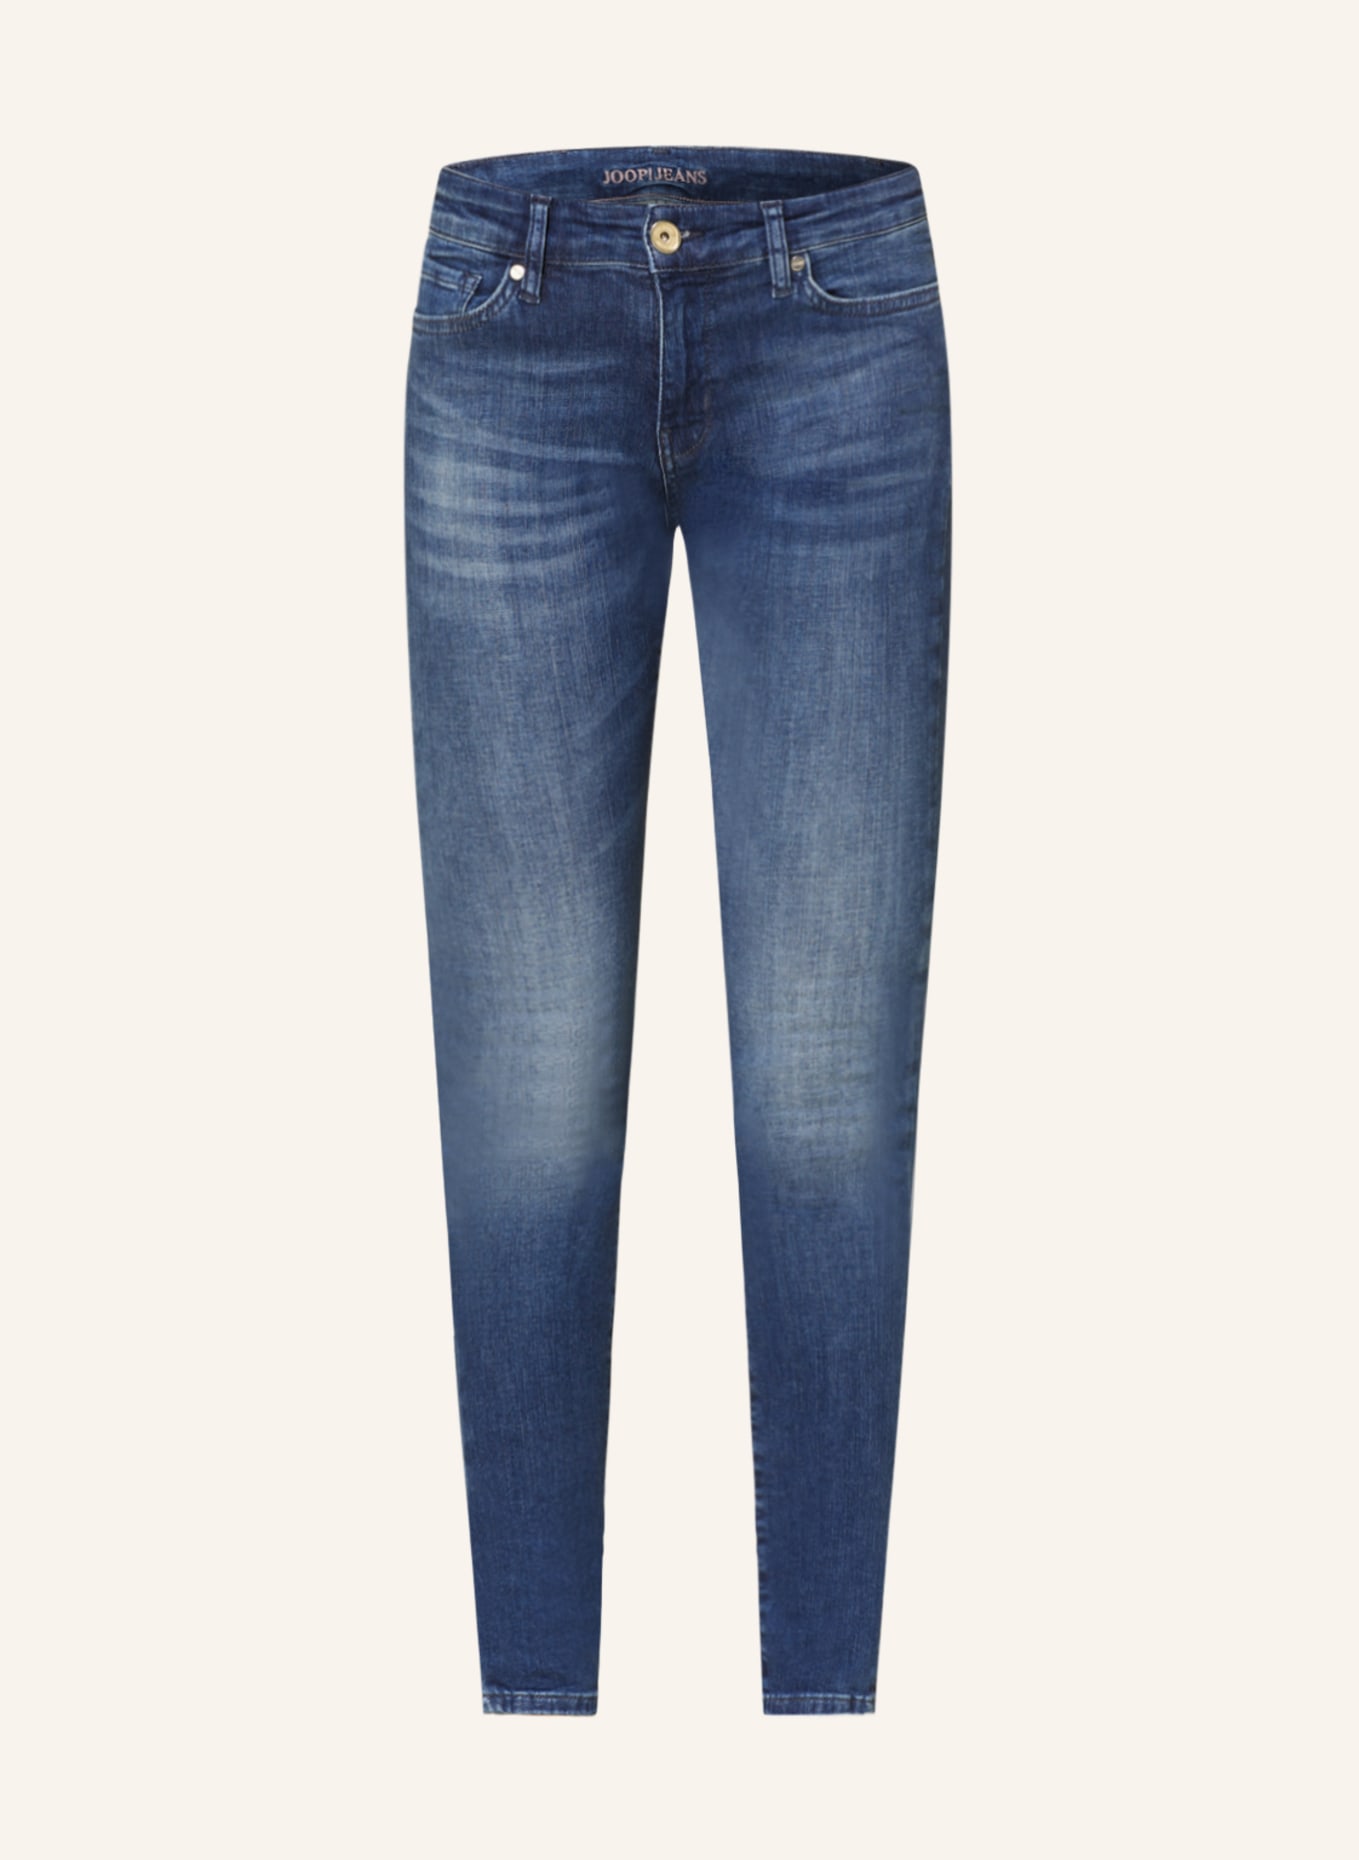 JOOP! Skinny Jeans, Farbe: 425 Medium Blue                425 (Bild 1)